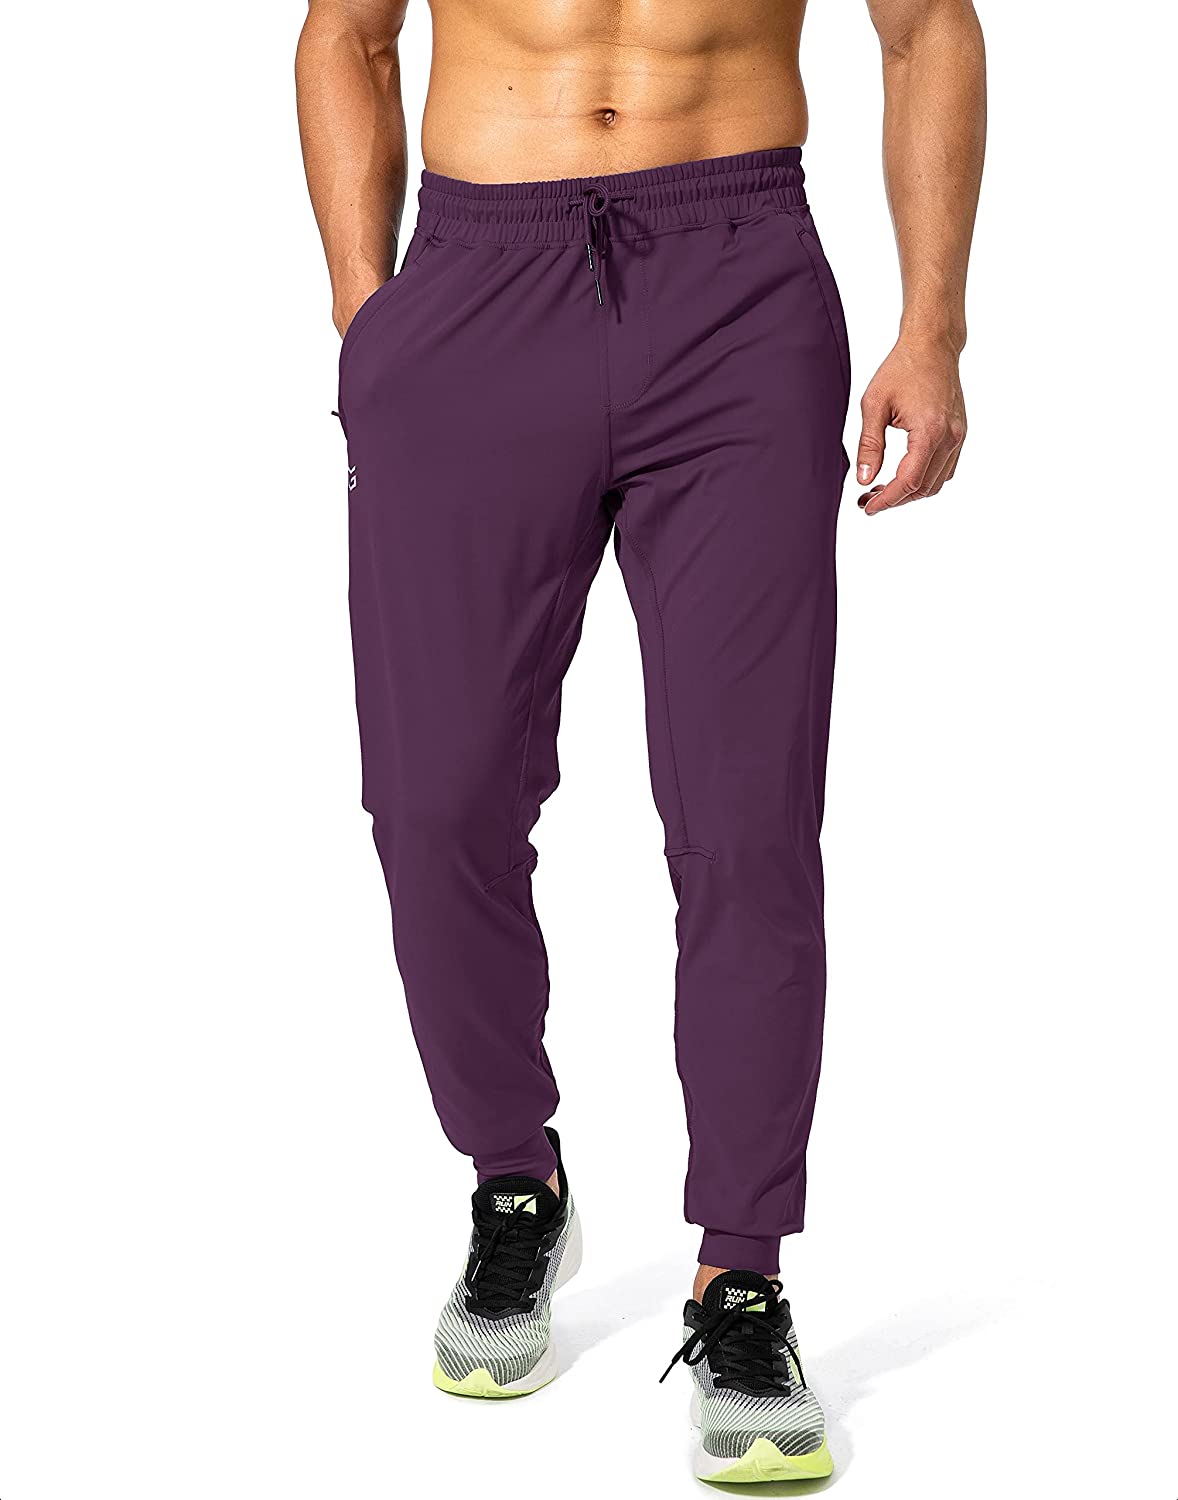 G Gradual Men's Sweatpants with Zipper Pockets Athletic Pants